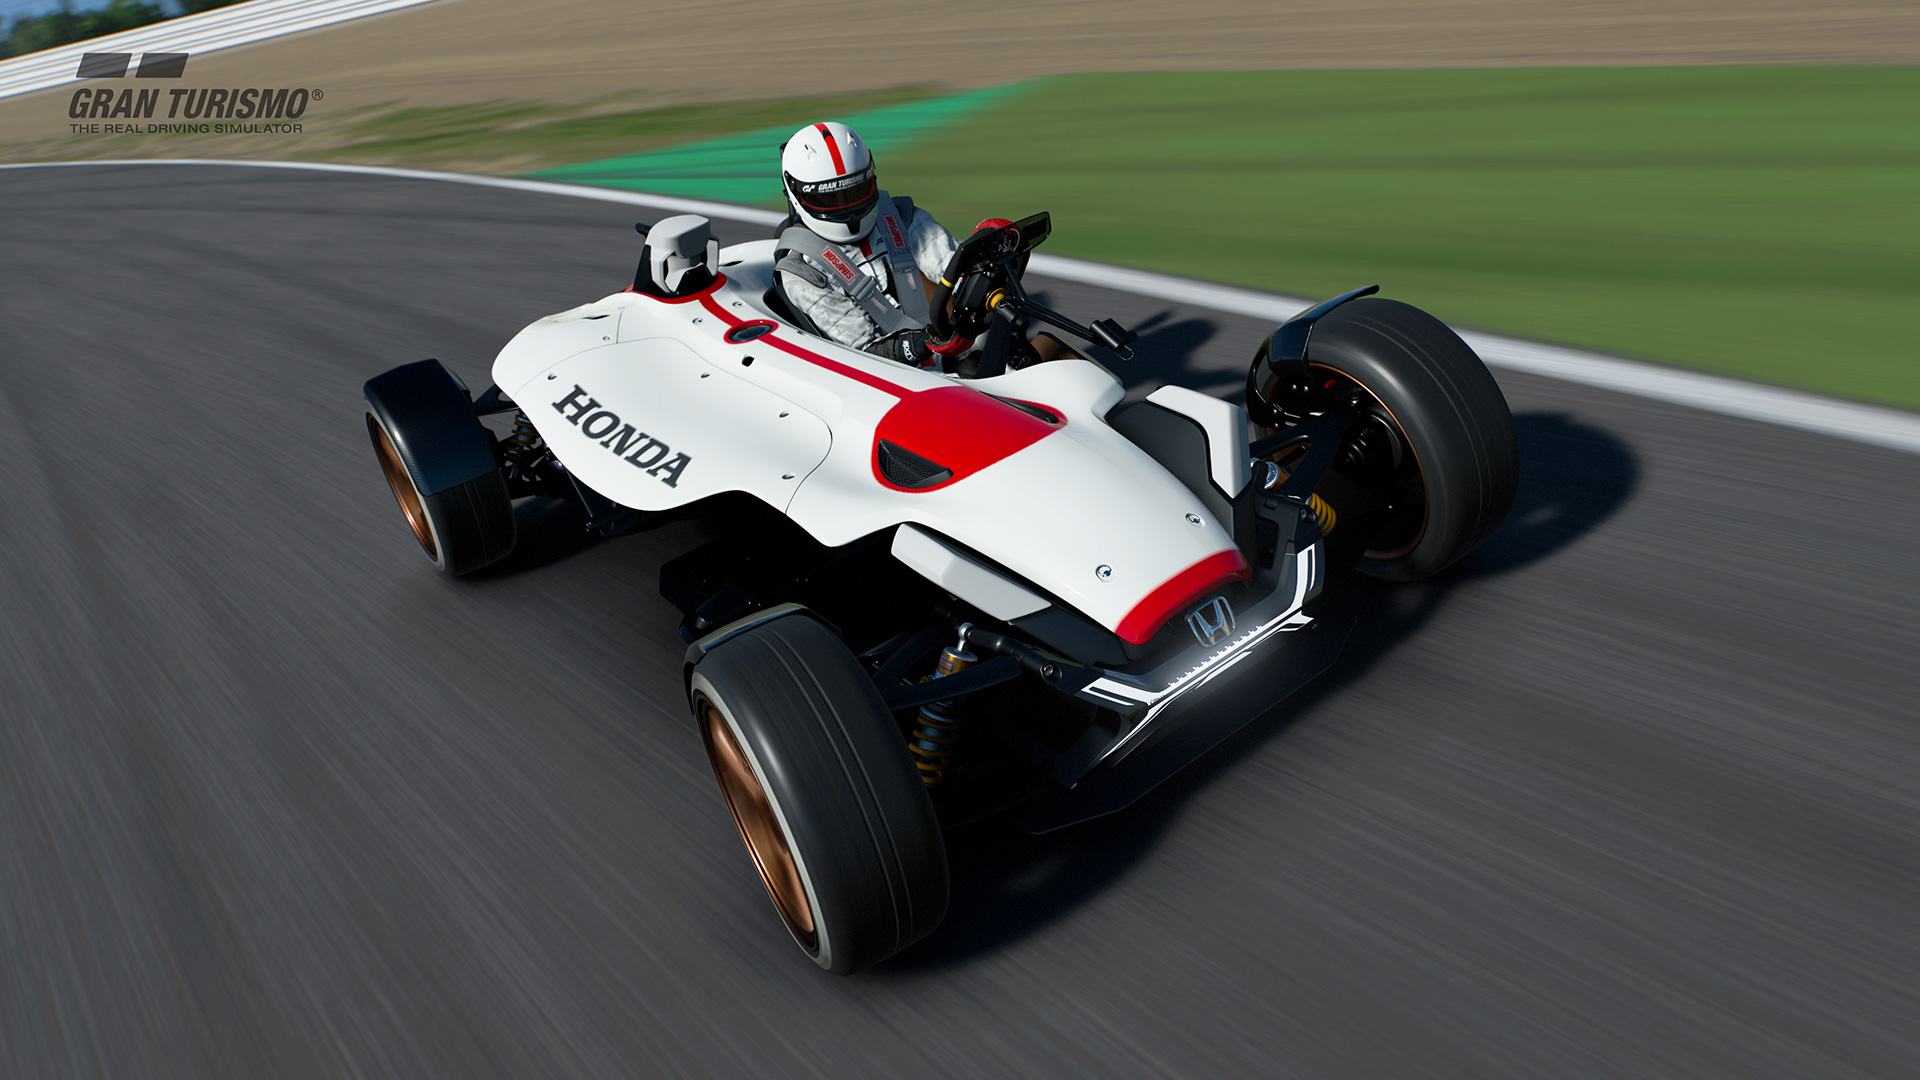 G1 - Game 'Gran Turismo 5' terá protótipo de carro mais rápido do